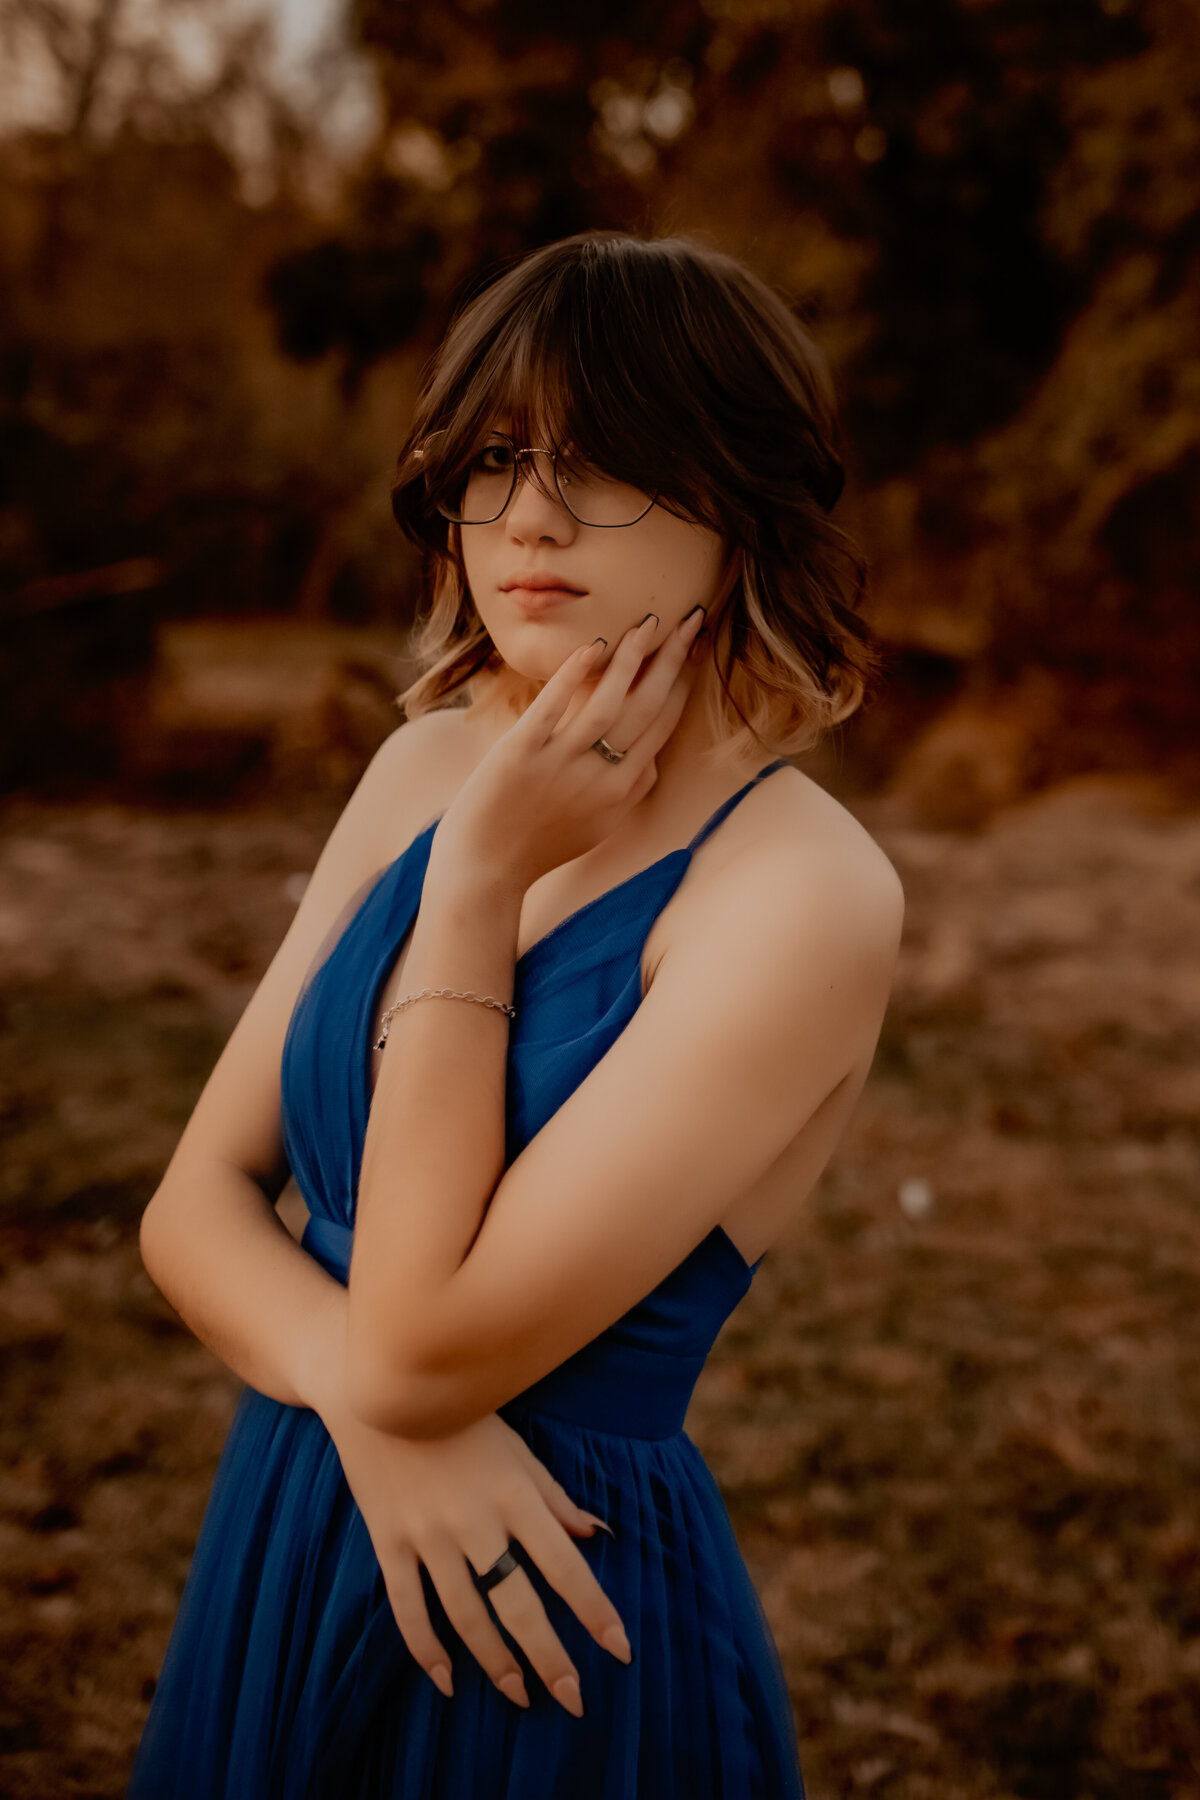 Livingston, Tx girl in blue dress at sunset photos